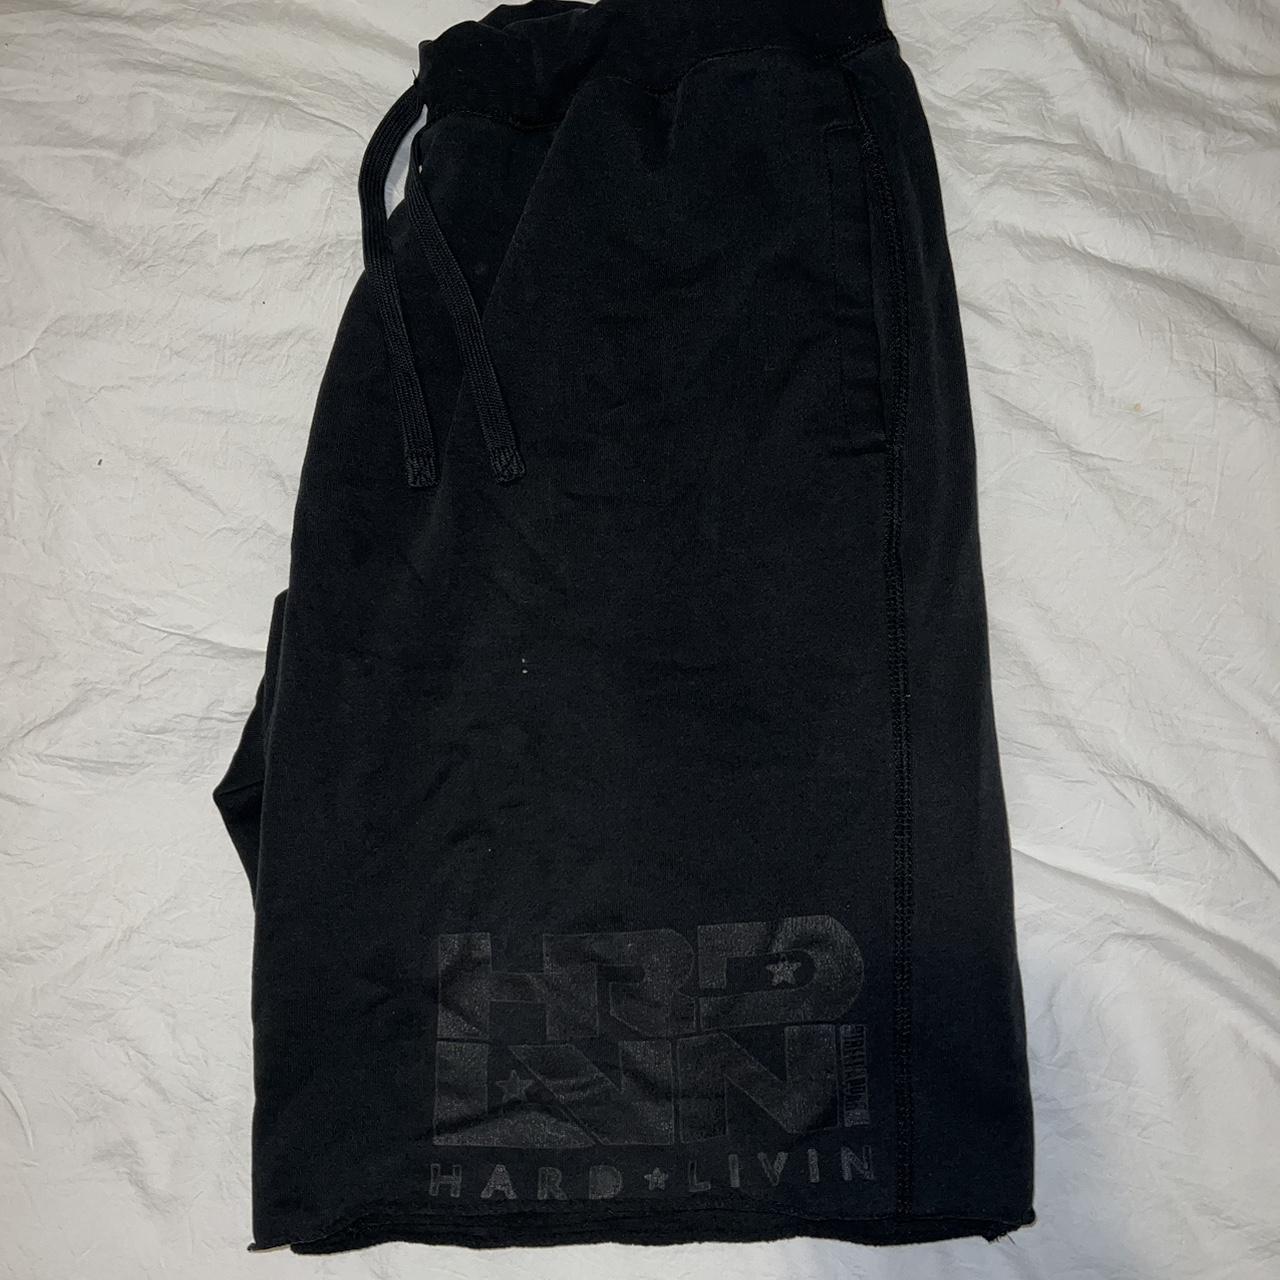 Assh0les Live Forever black booty shorts - size XL - Depop